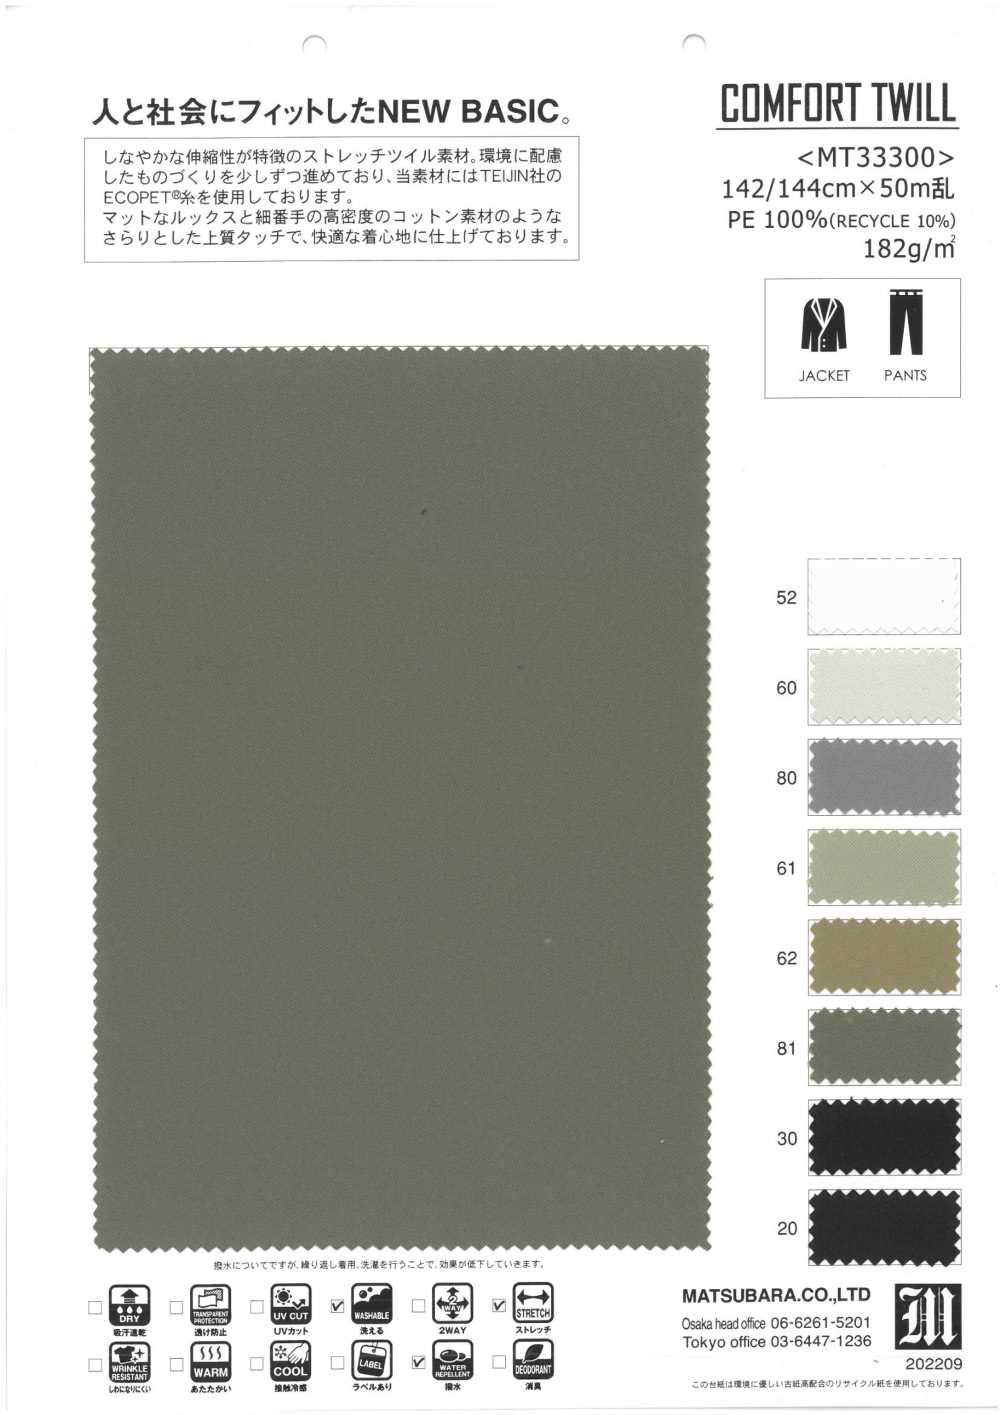 MT33300 KOMFORT-TWILL[Textilgewebe] Matsubara